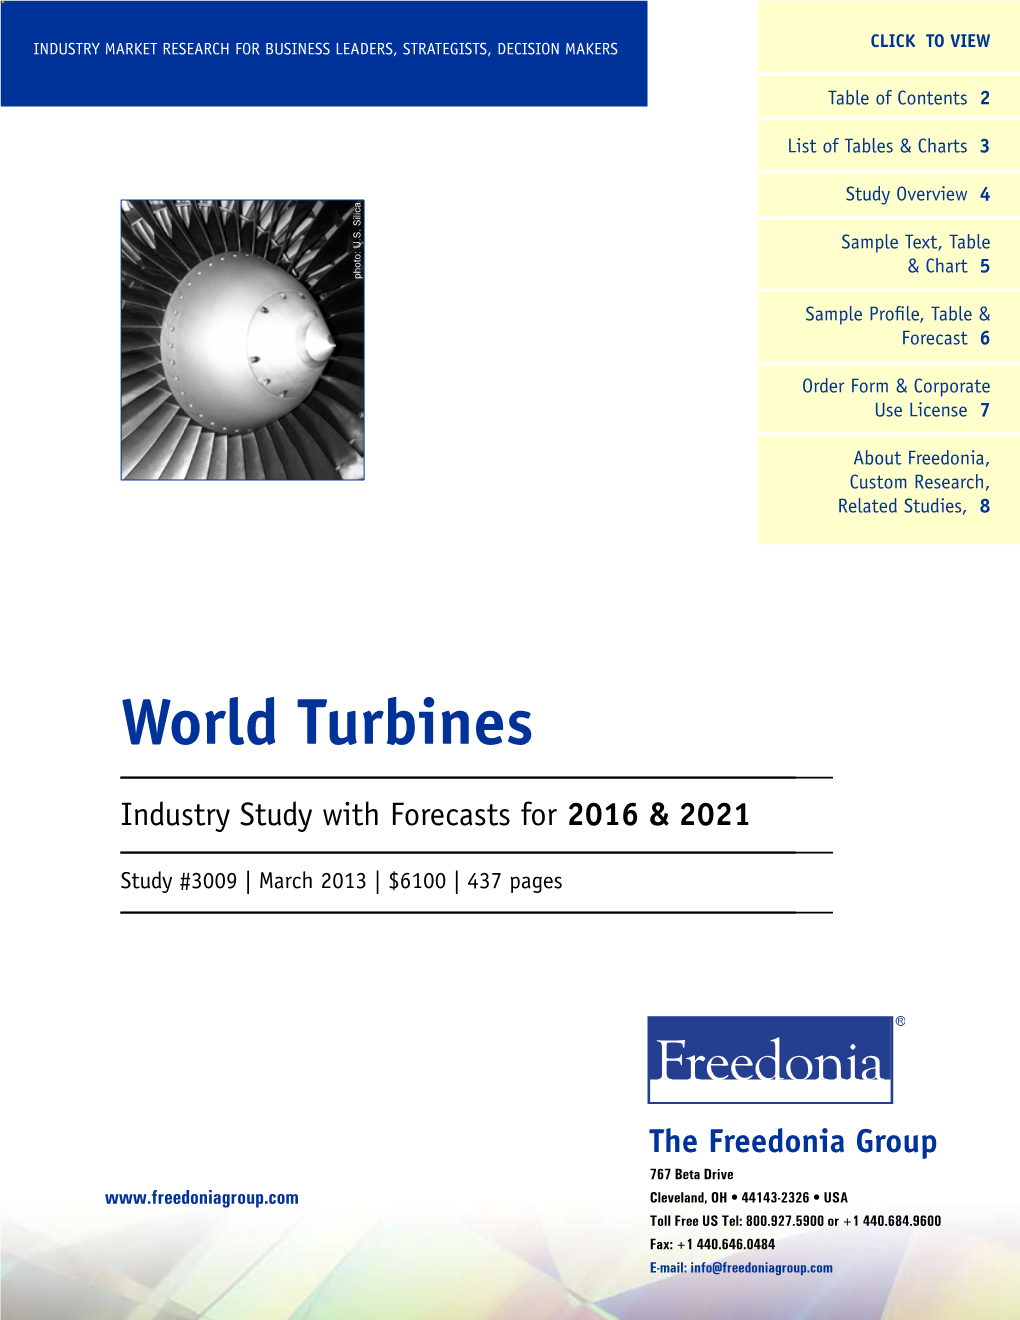 World Turbines